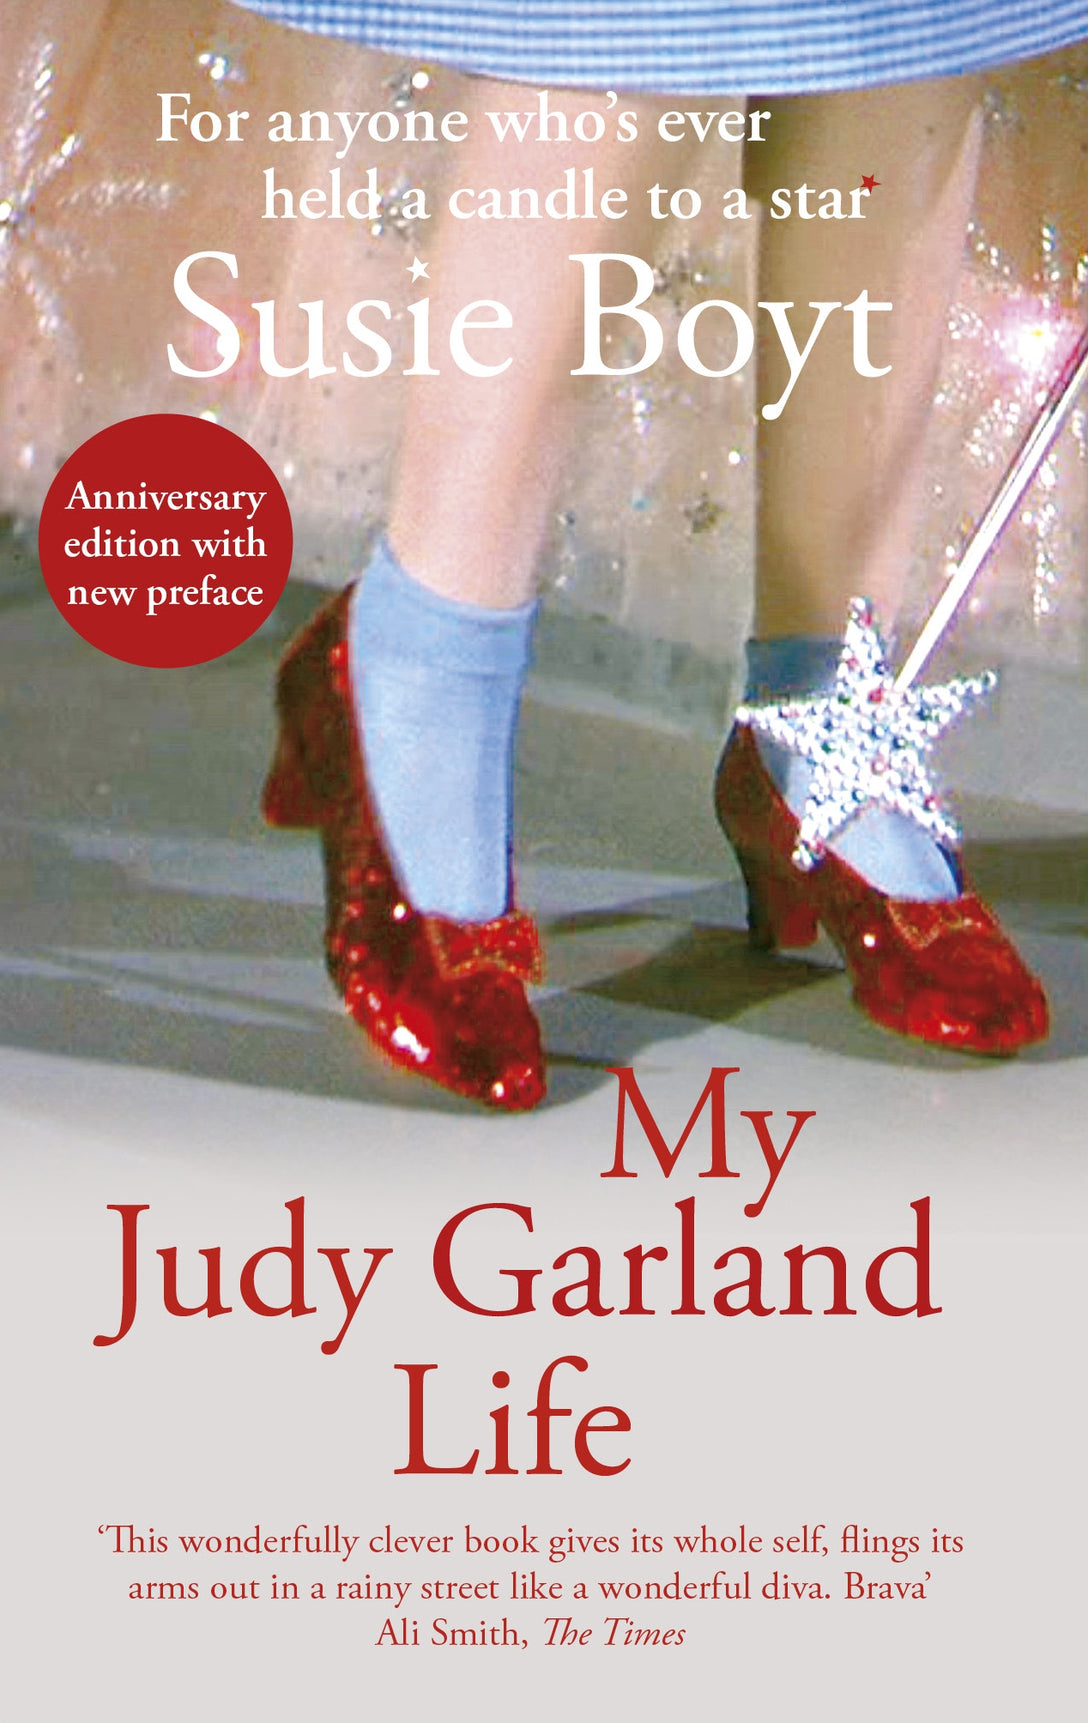 My Judy Garland Life by Susie Boyt